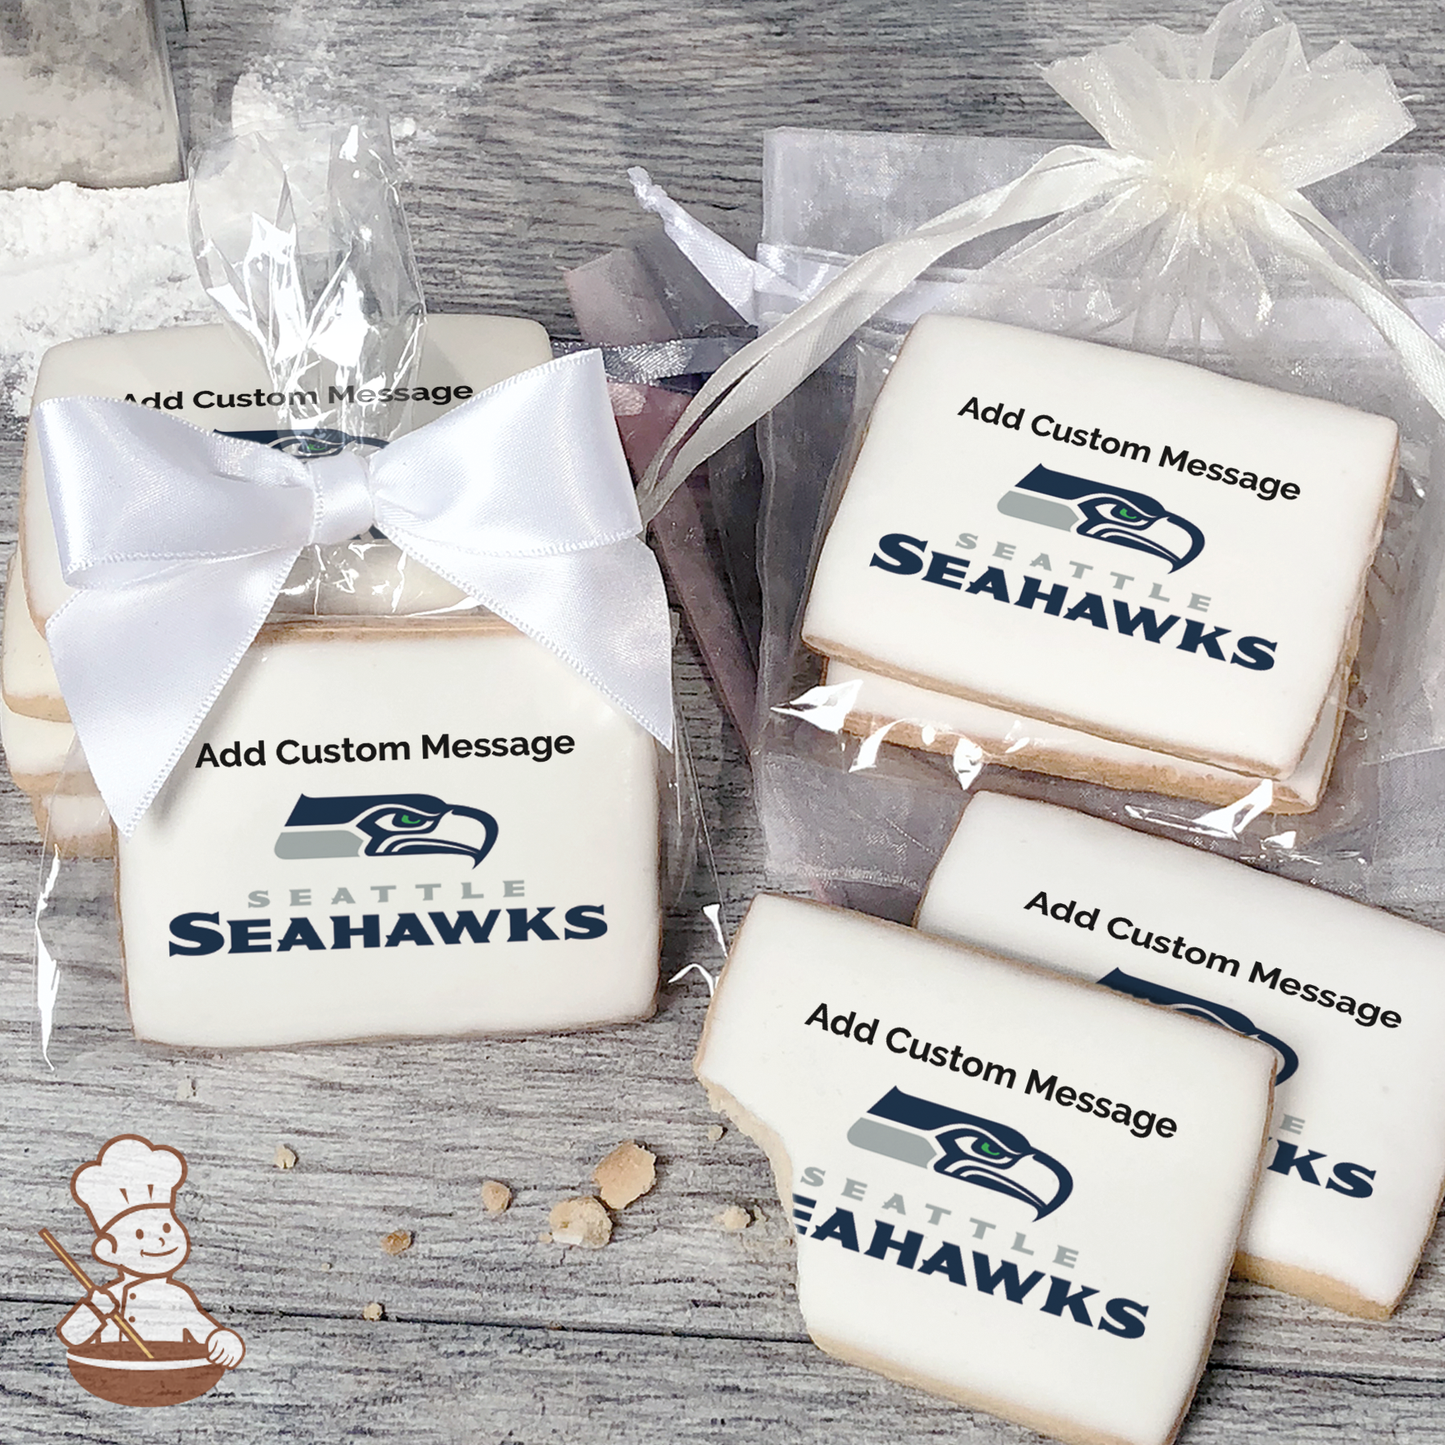 NFL Seattle Seahawks Custom Message Cookies (Rectangle)